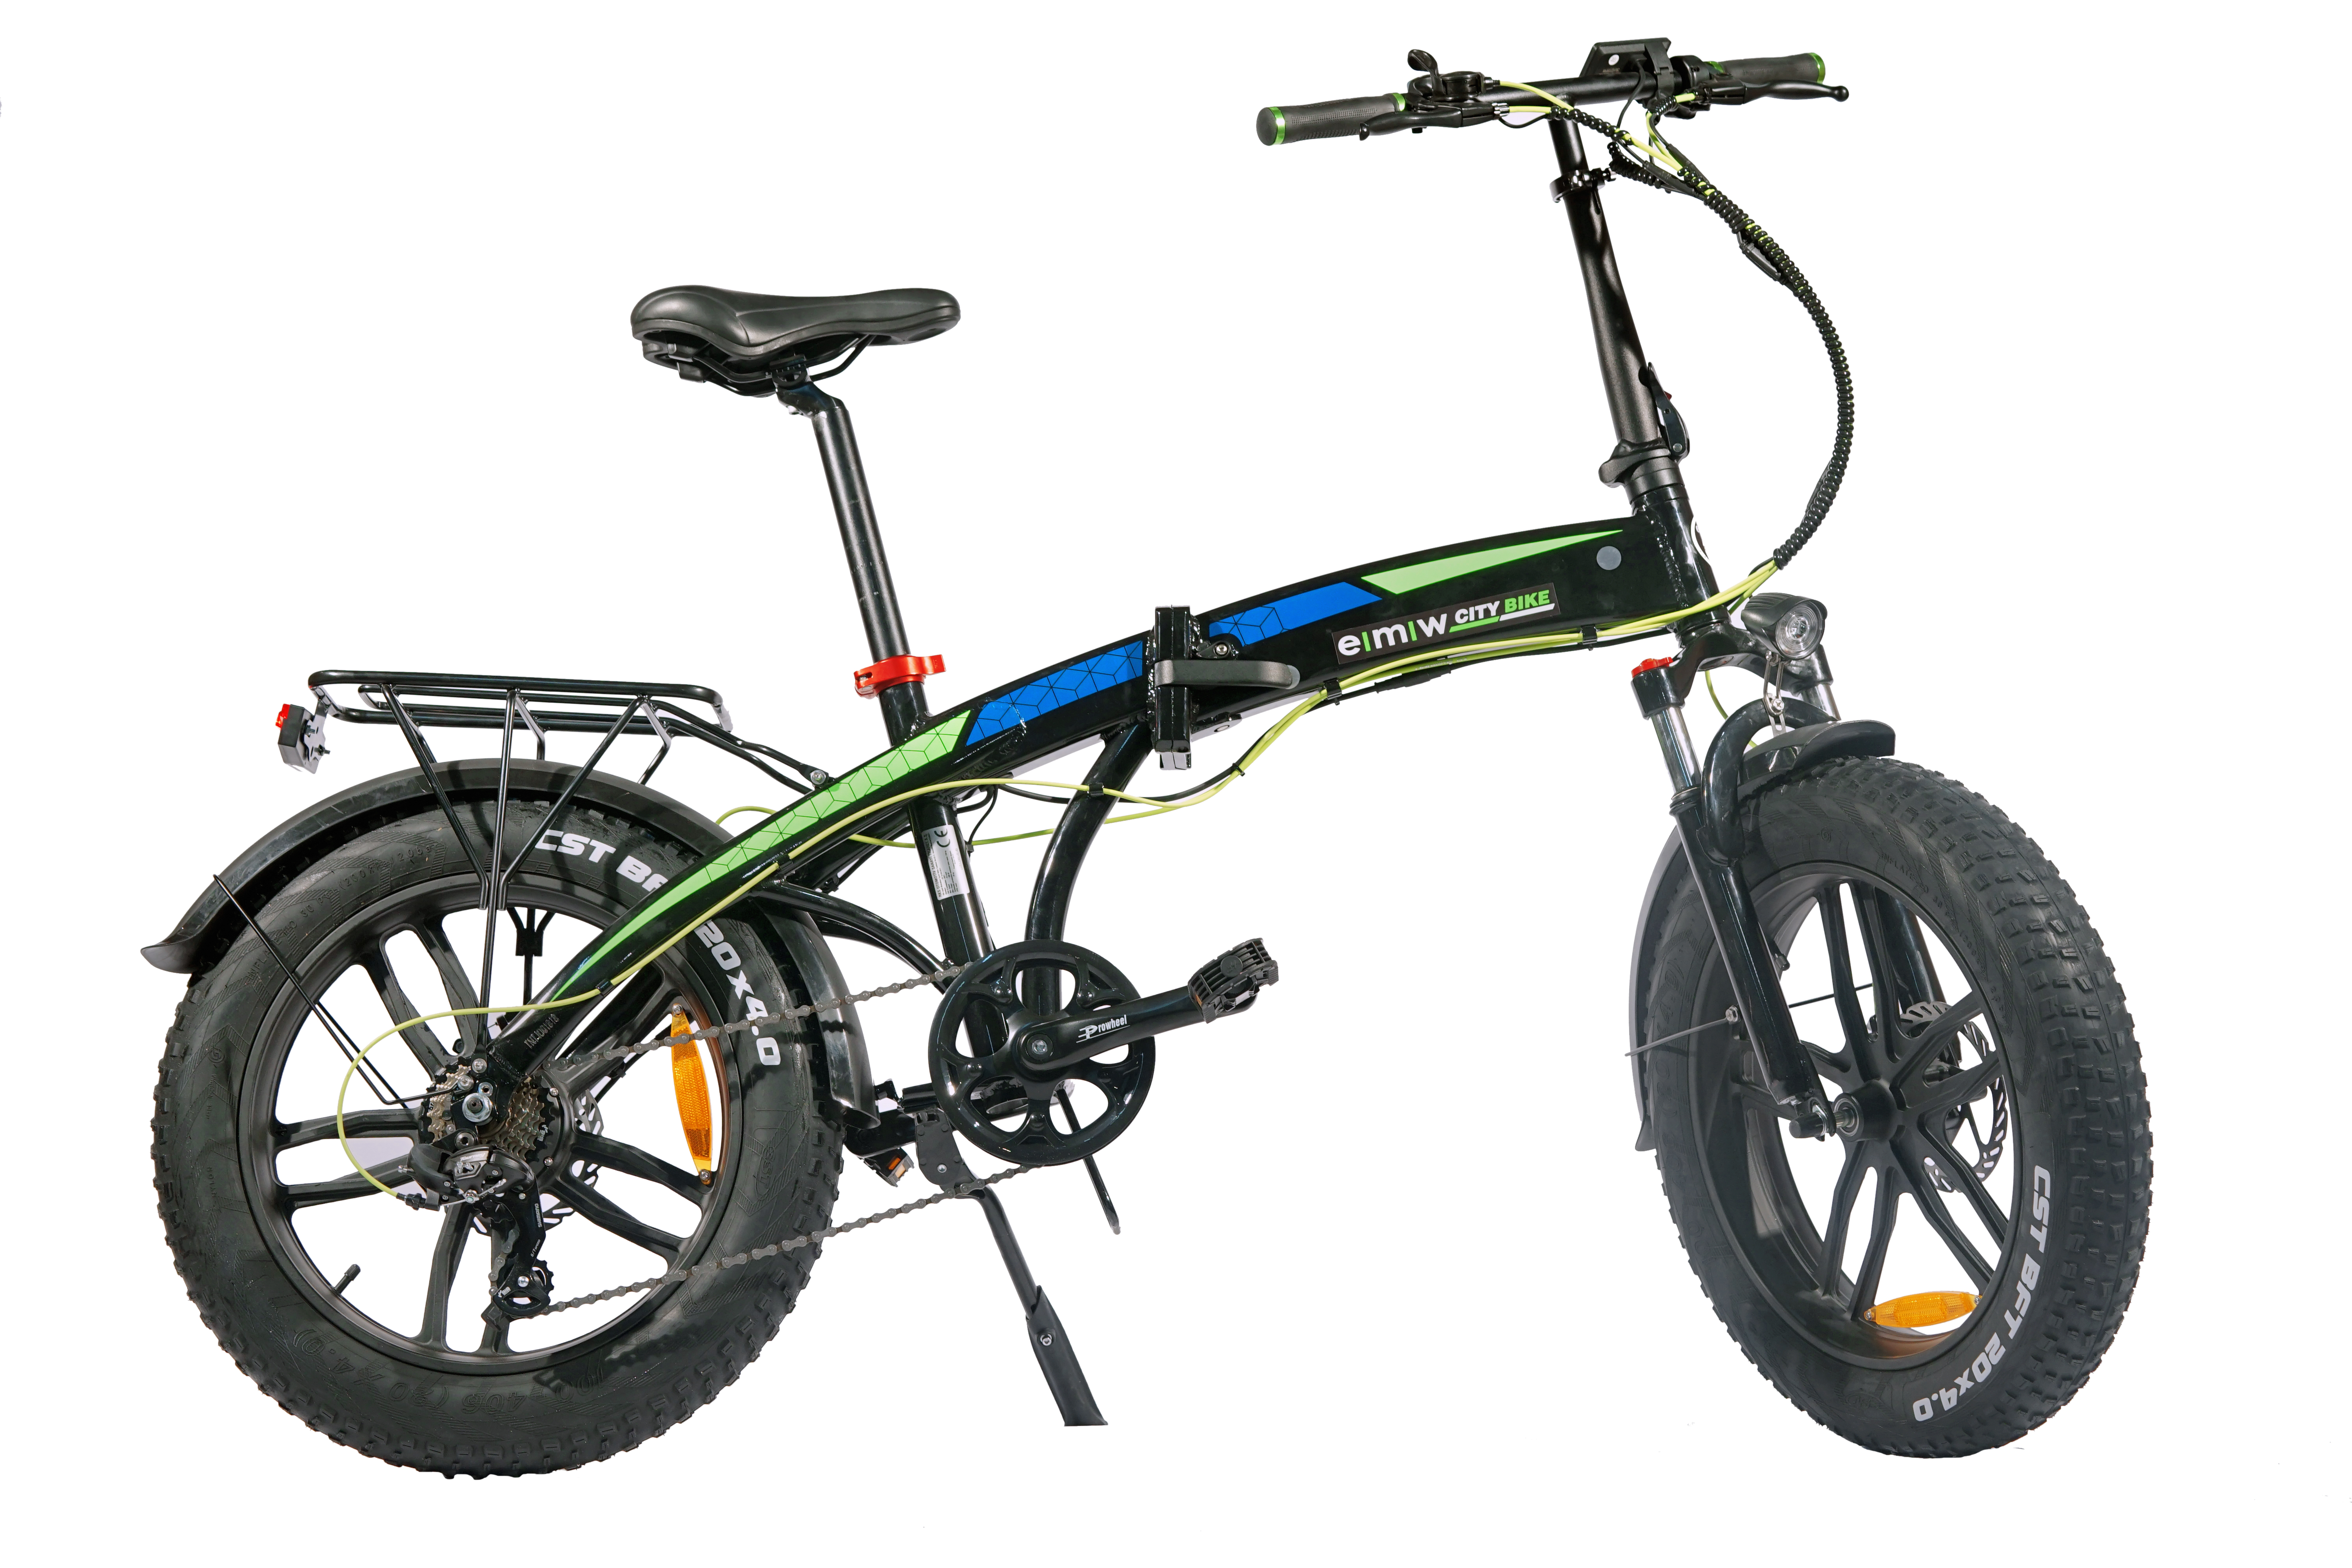 EMW City Bike FAT TYRES ηλεκτρικό ποδήλατο με χονδρά λάστιχα ιδανικό για χωματόδρομο